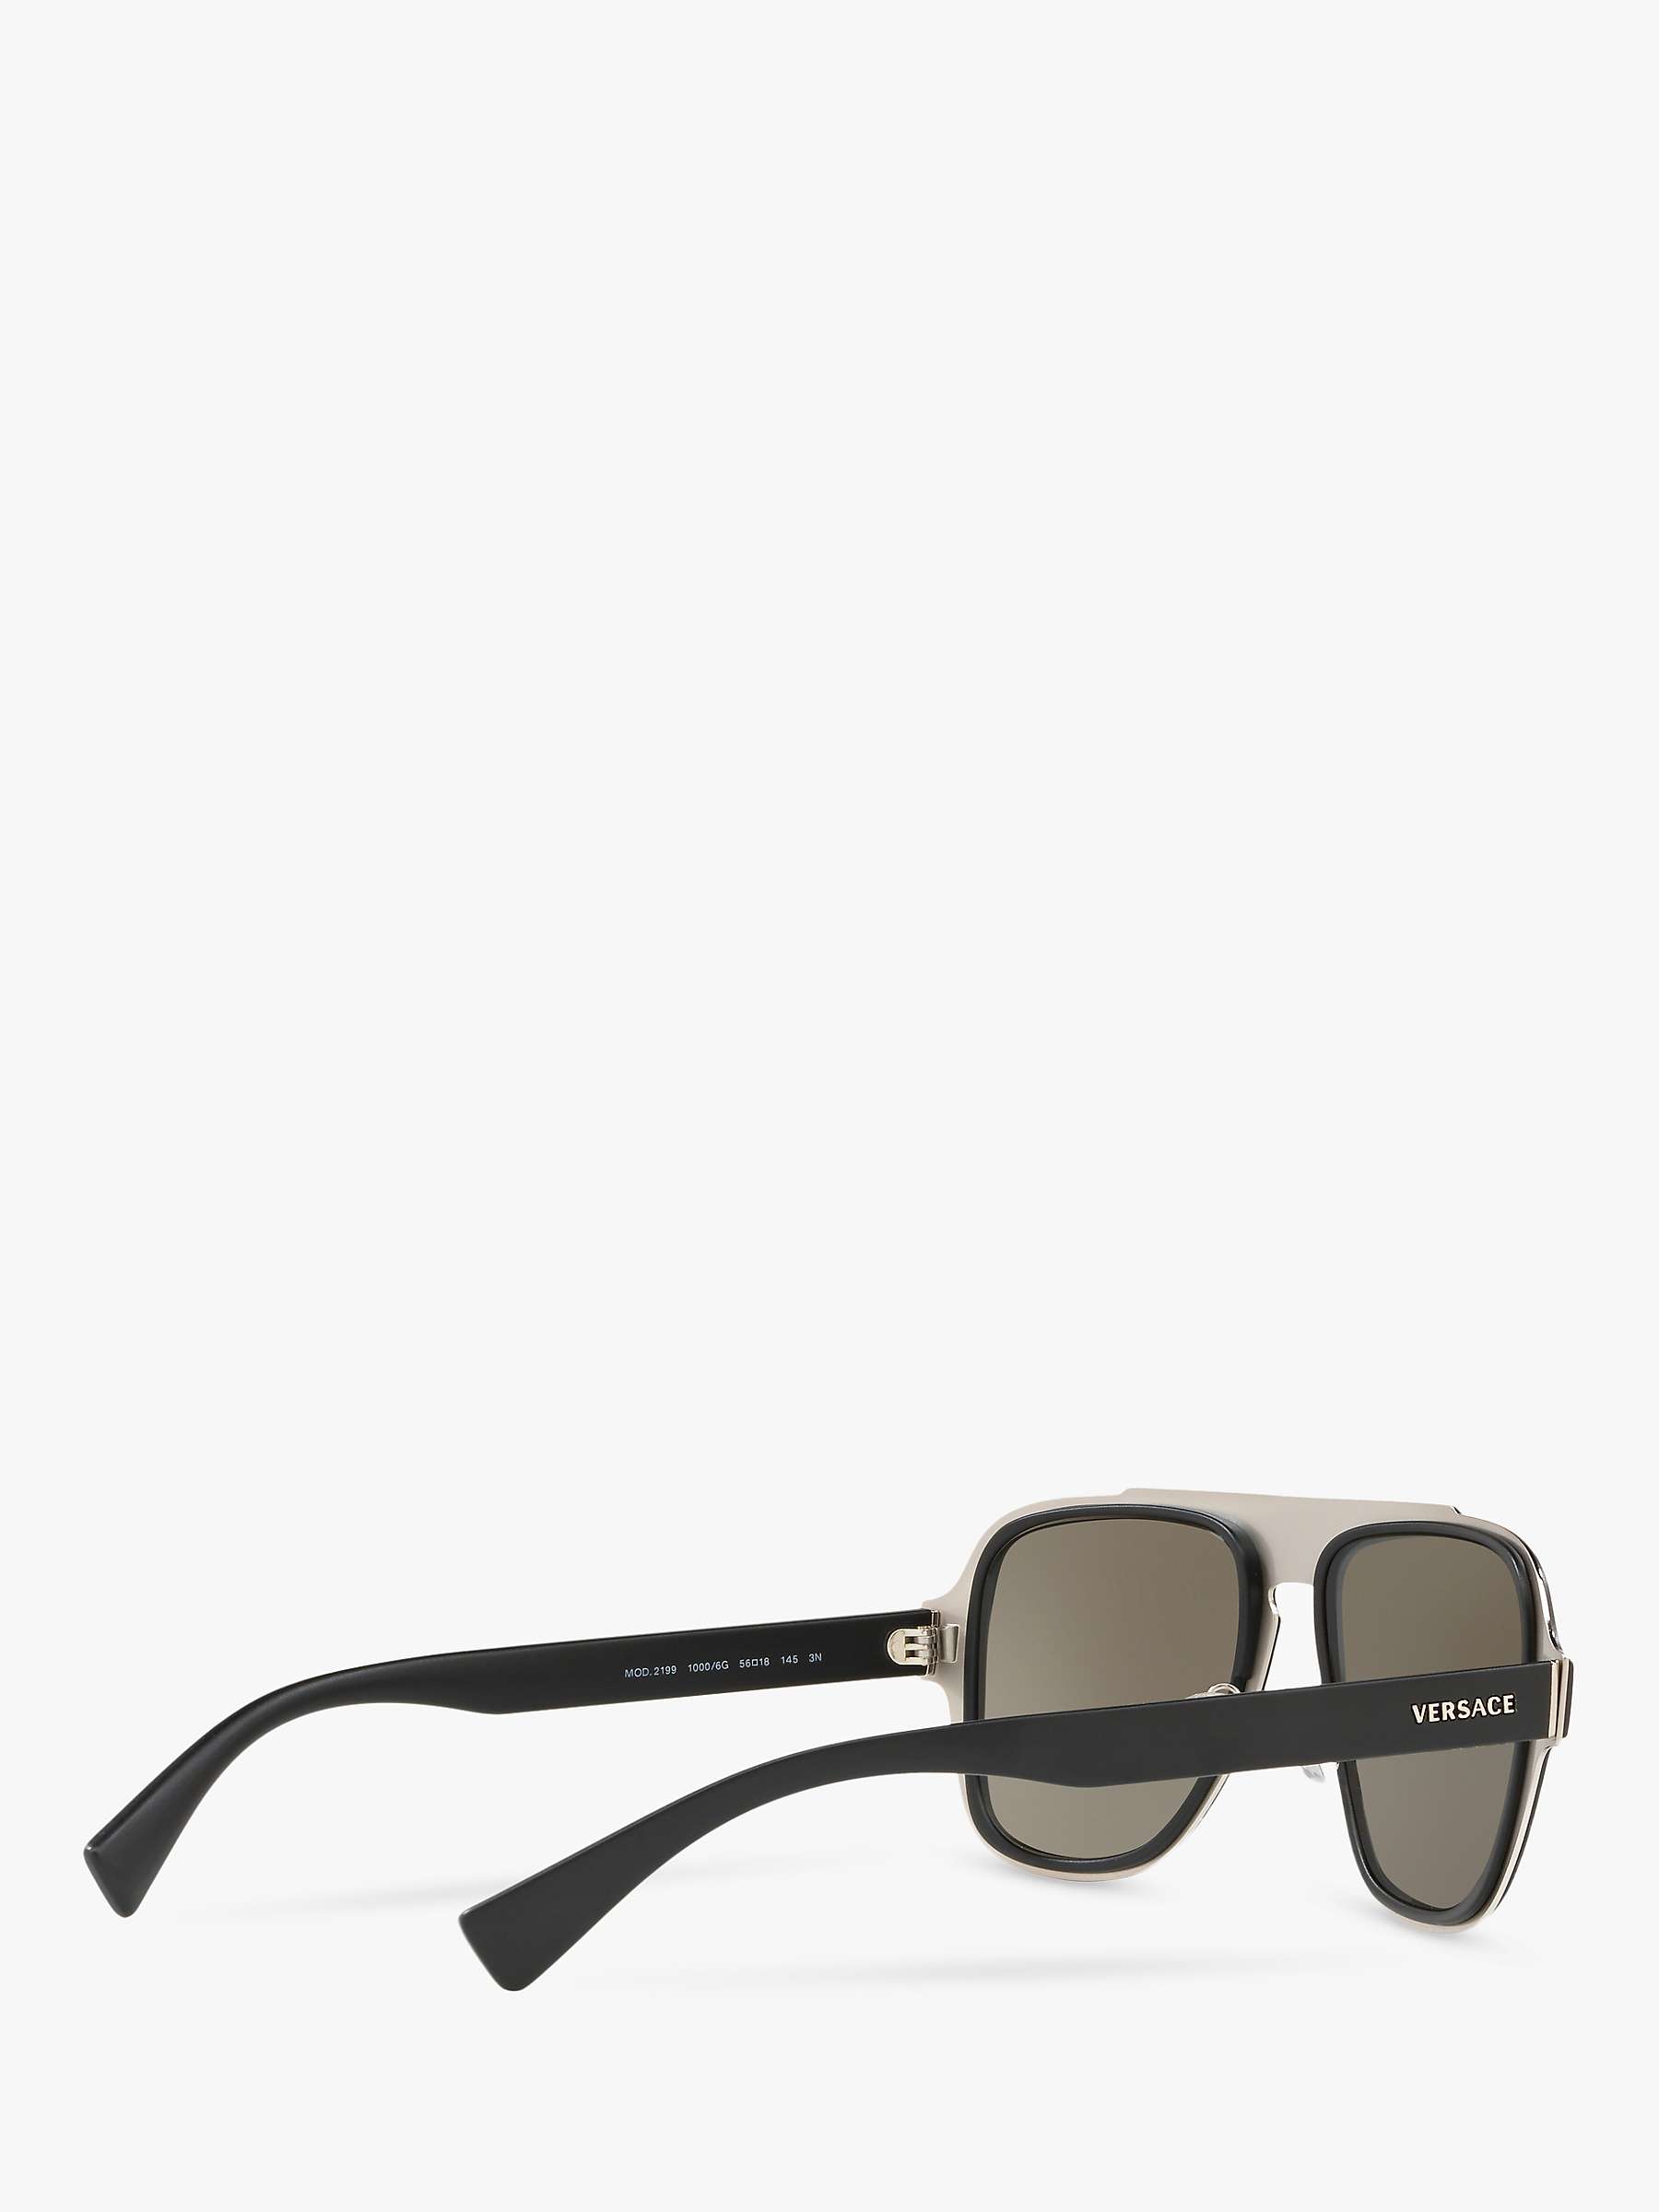 Buy Versace VE2199 Men's Geometric Sunglasses, Black/Silver Mirror Online at johnlewis.com